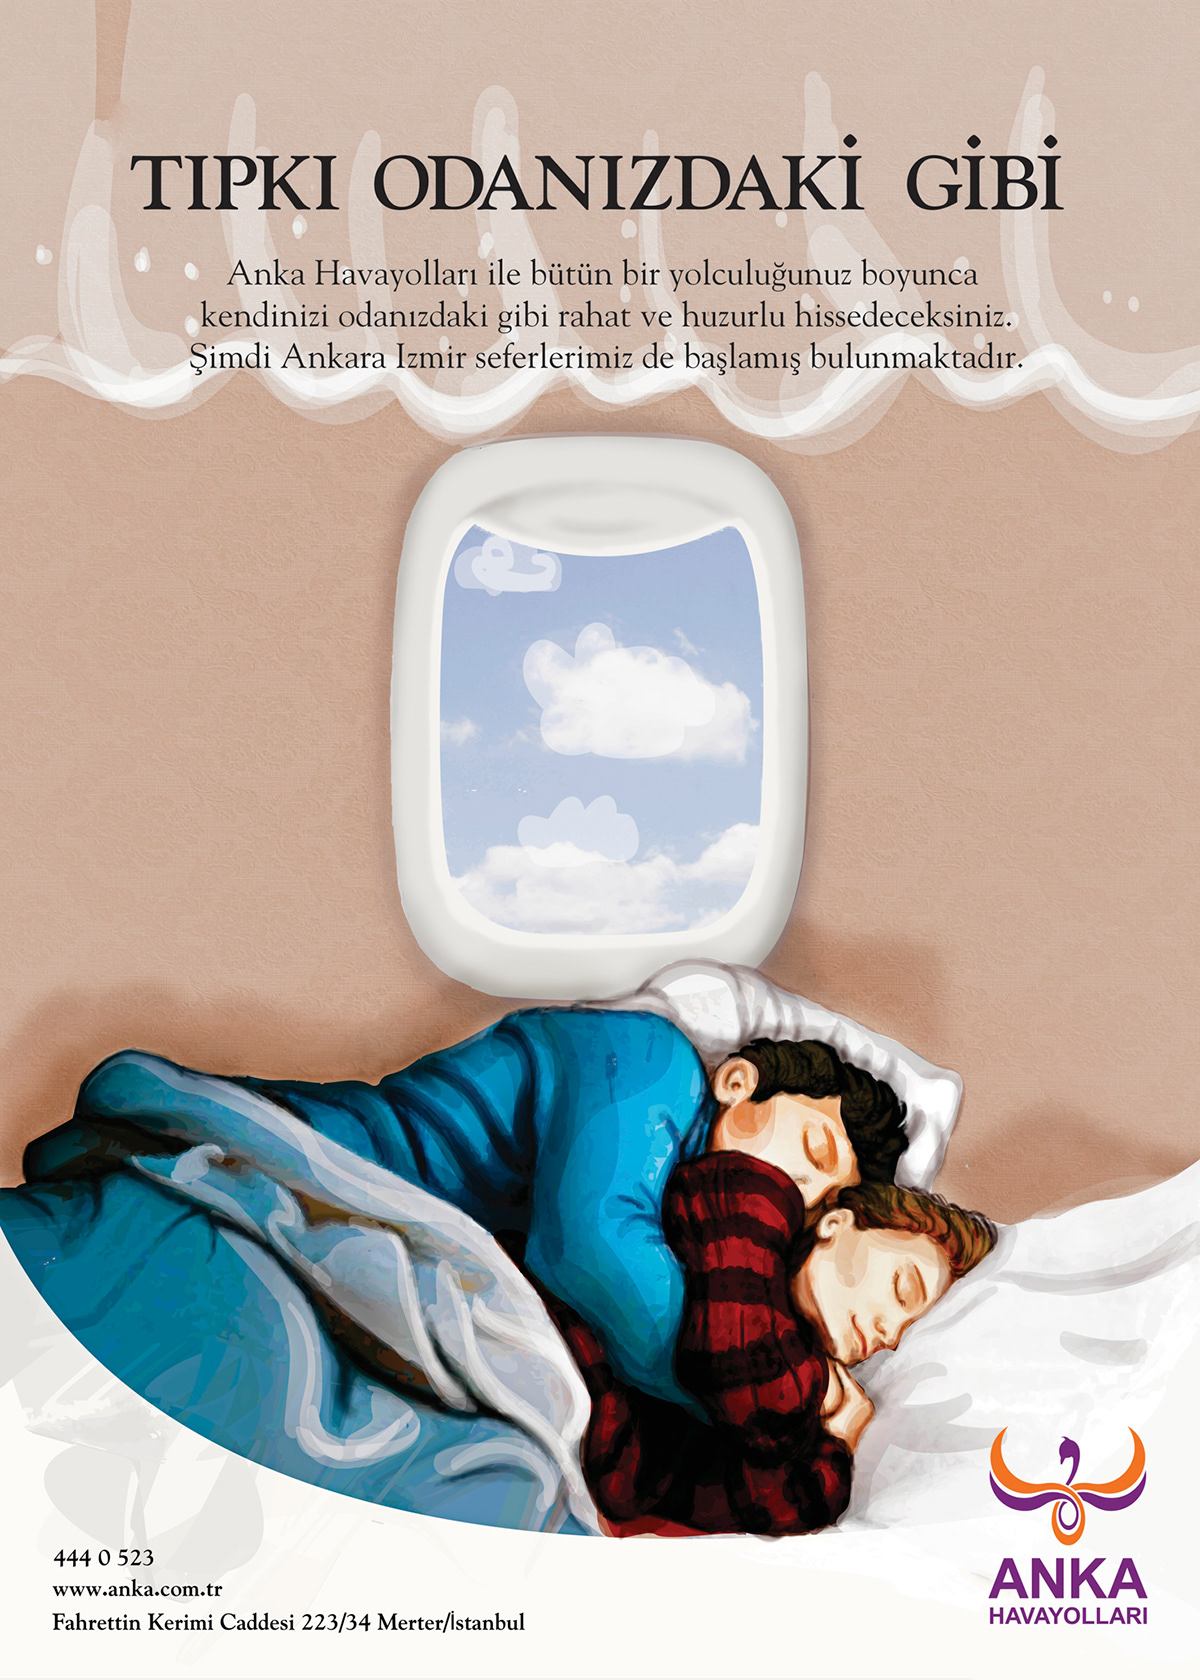 Airlines plane  airplane  anka  airways  branding  corporate identity  bird  Illustration  child book  book